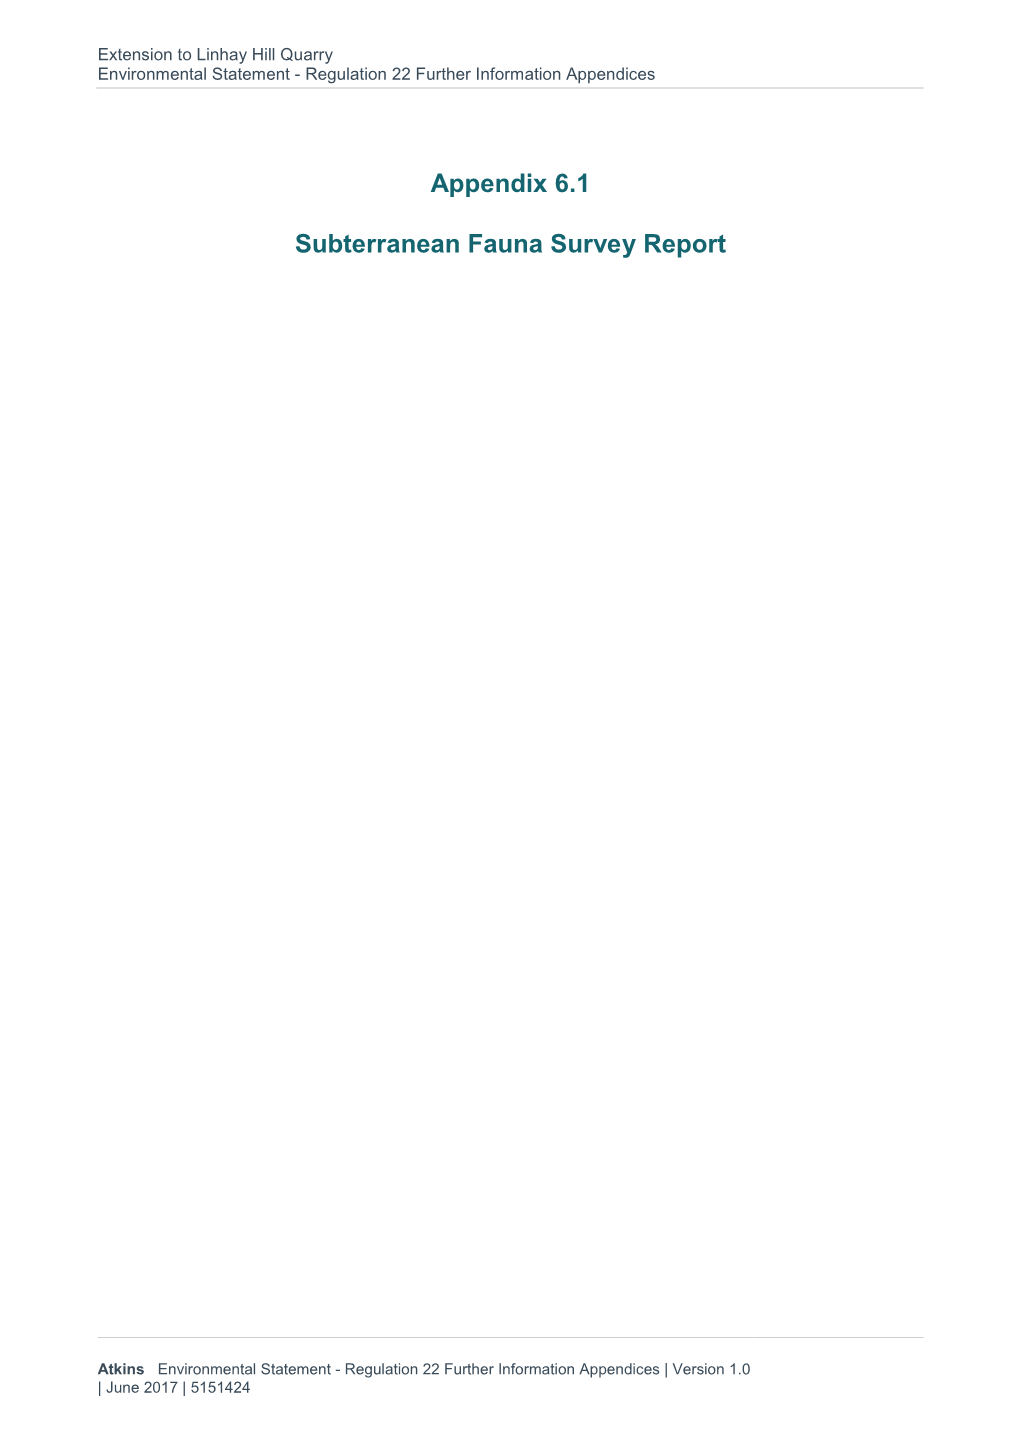 Appendix 6.1 Subterranean Fauna Survey Report